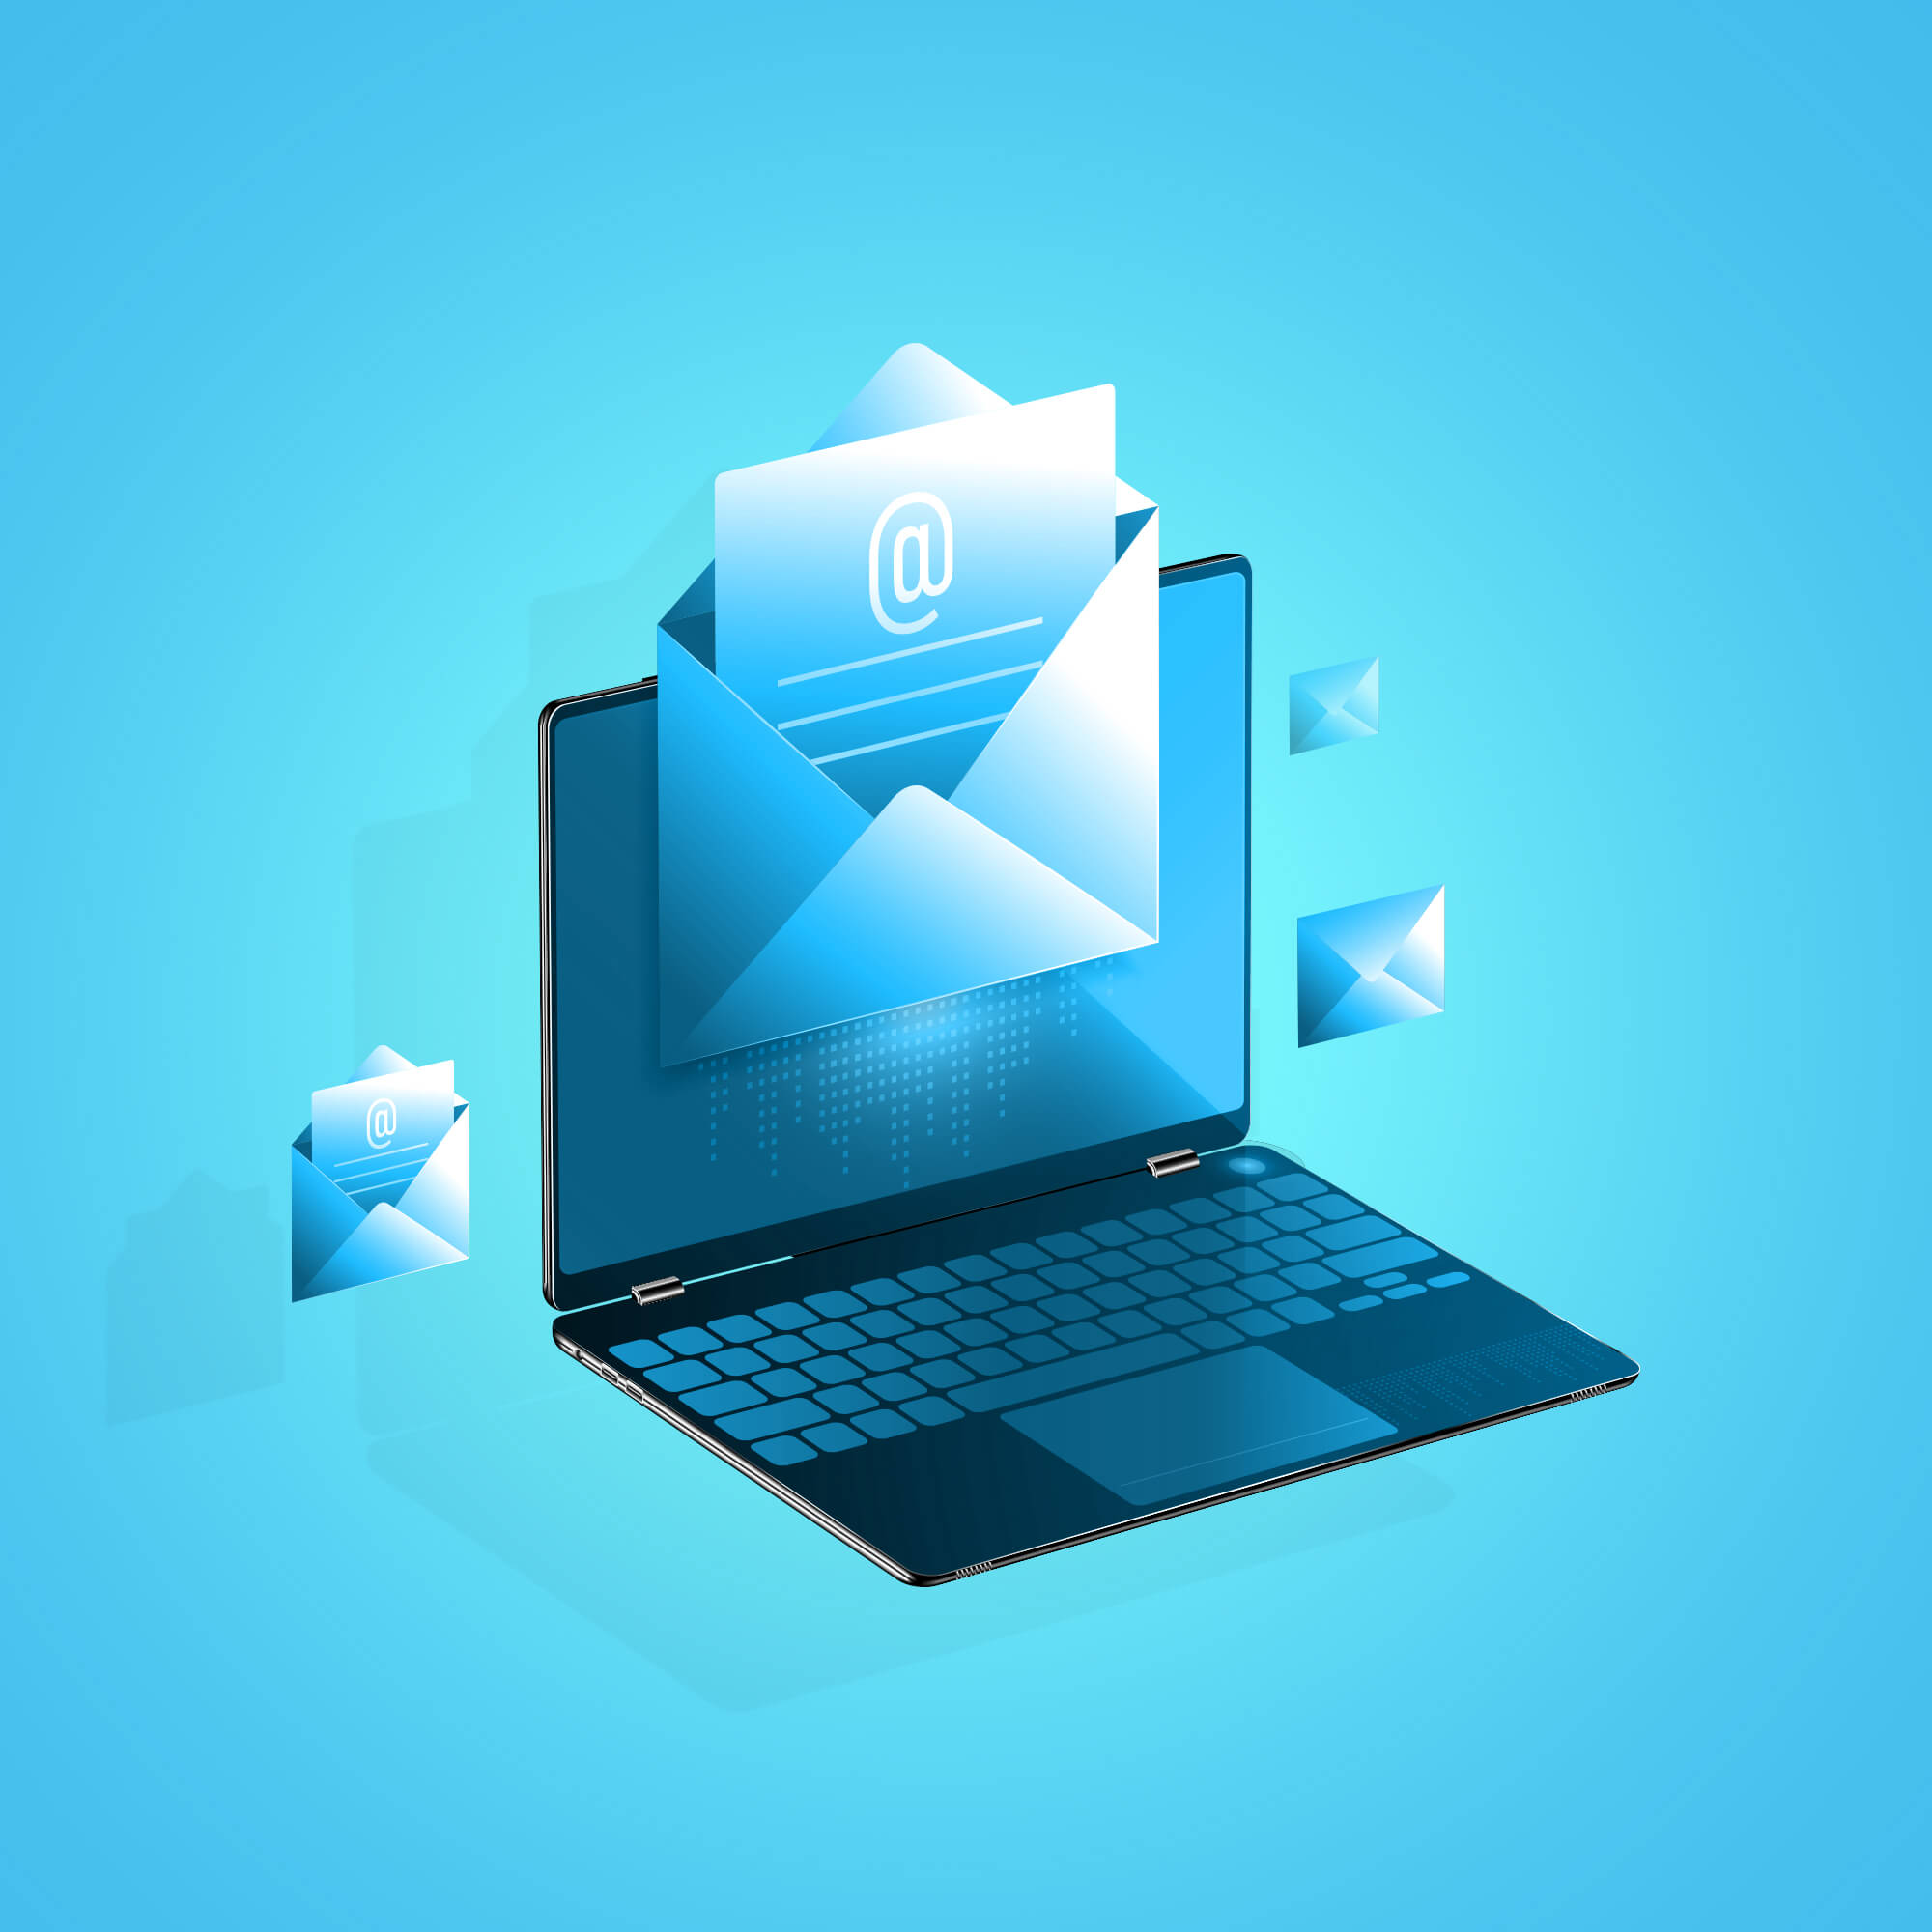 plexus-cloud-email-security